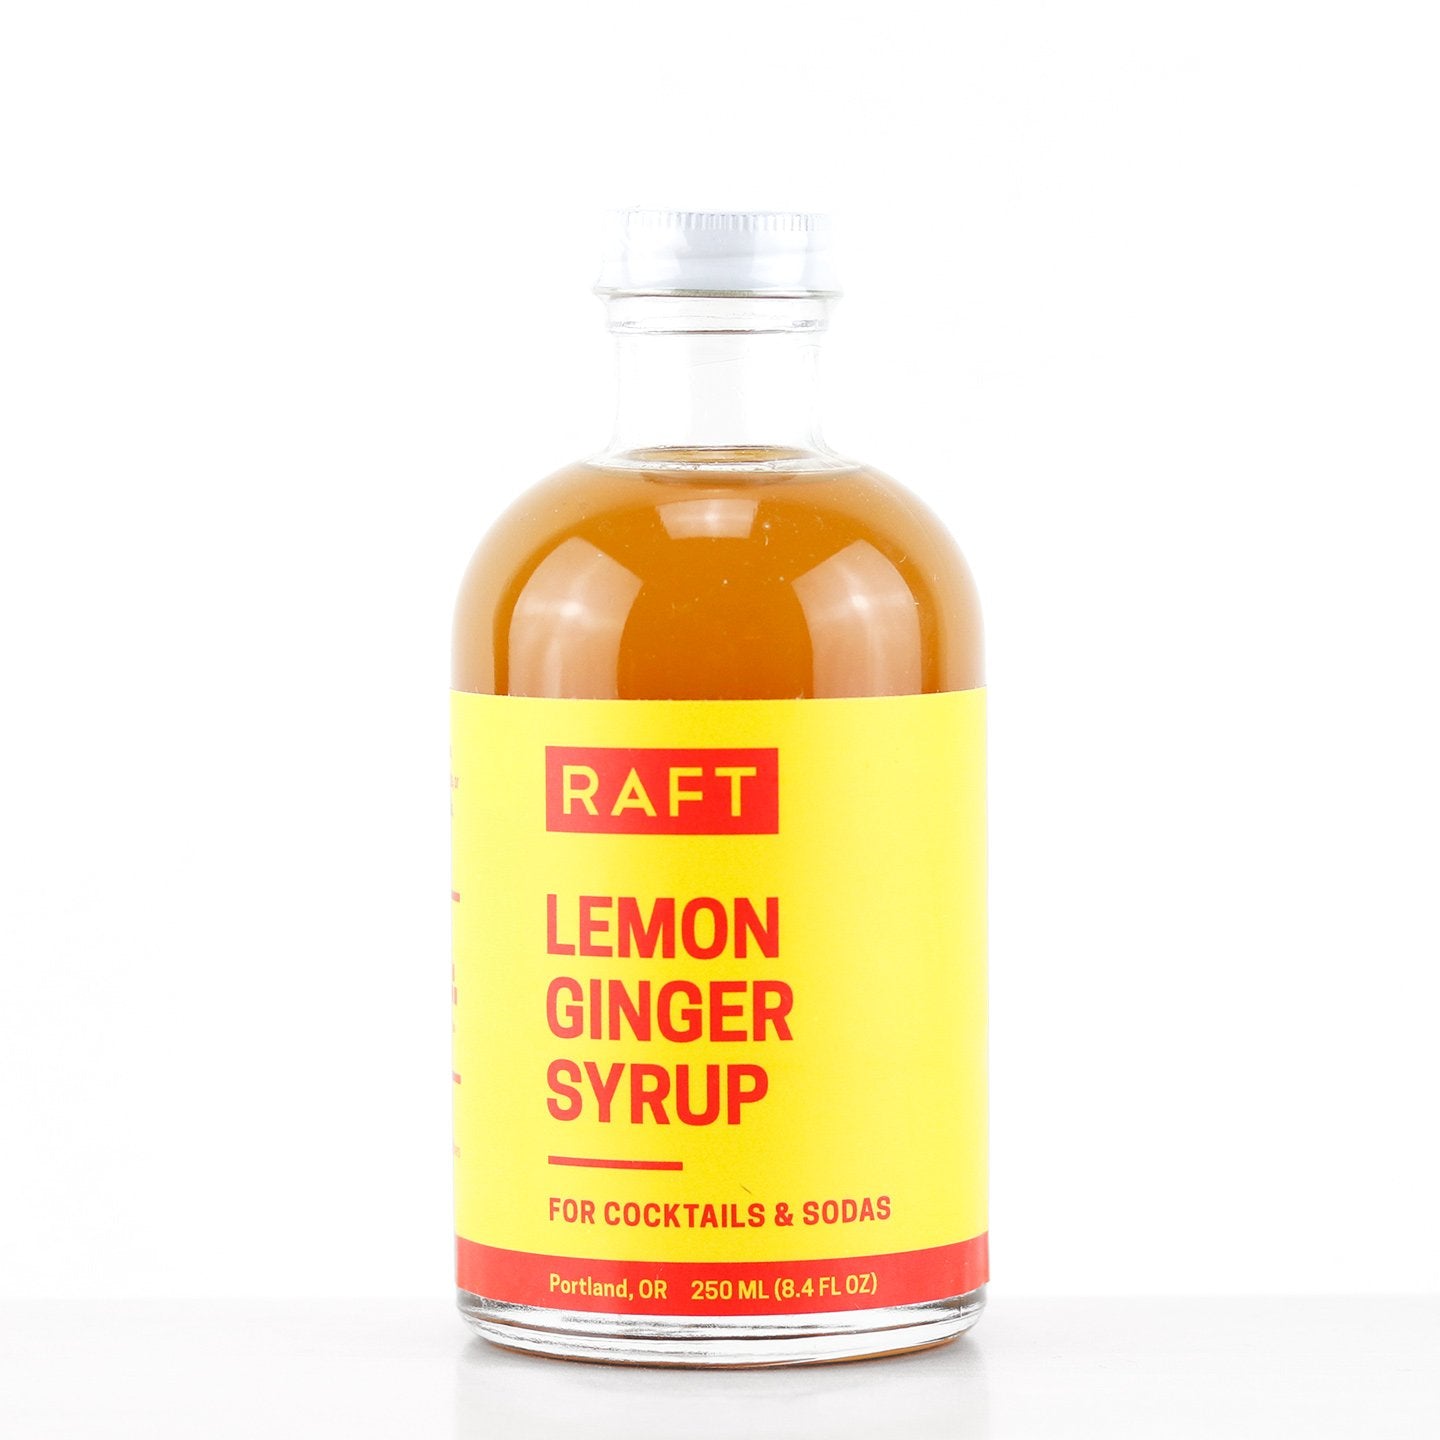 Raft Lemon Ginger Syrup